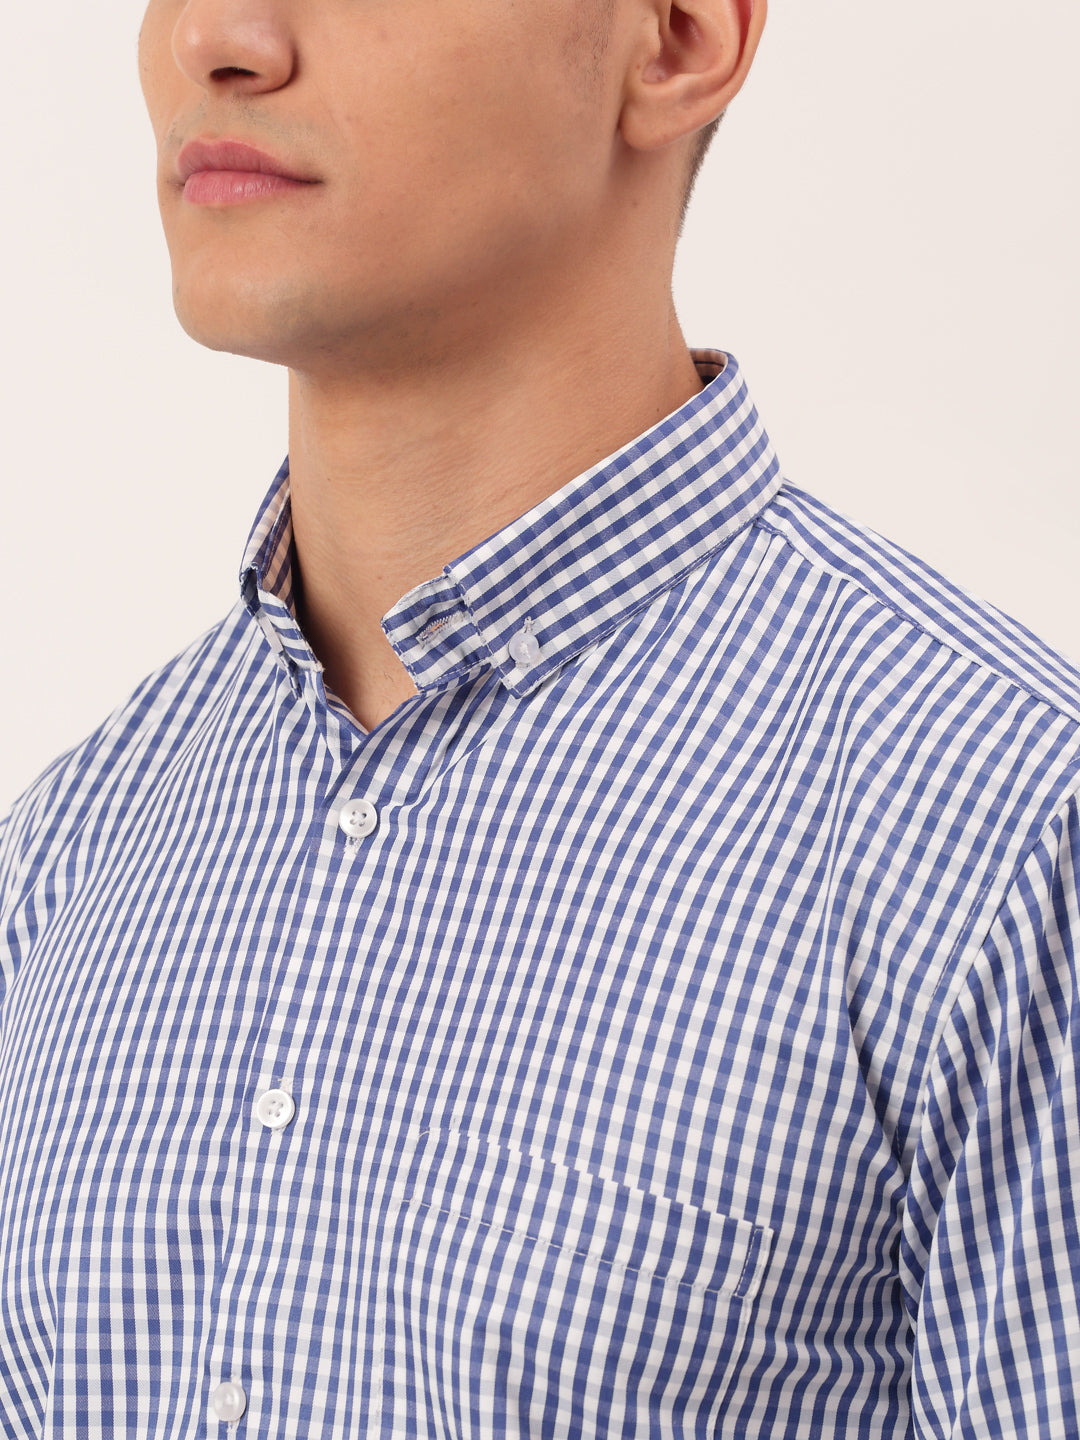 Men's Cotton Checked Button Down Collar Formal Shirts ( SF 810Blue ) - Jainish